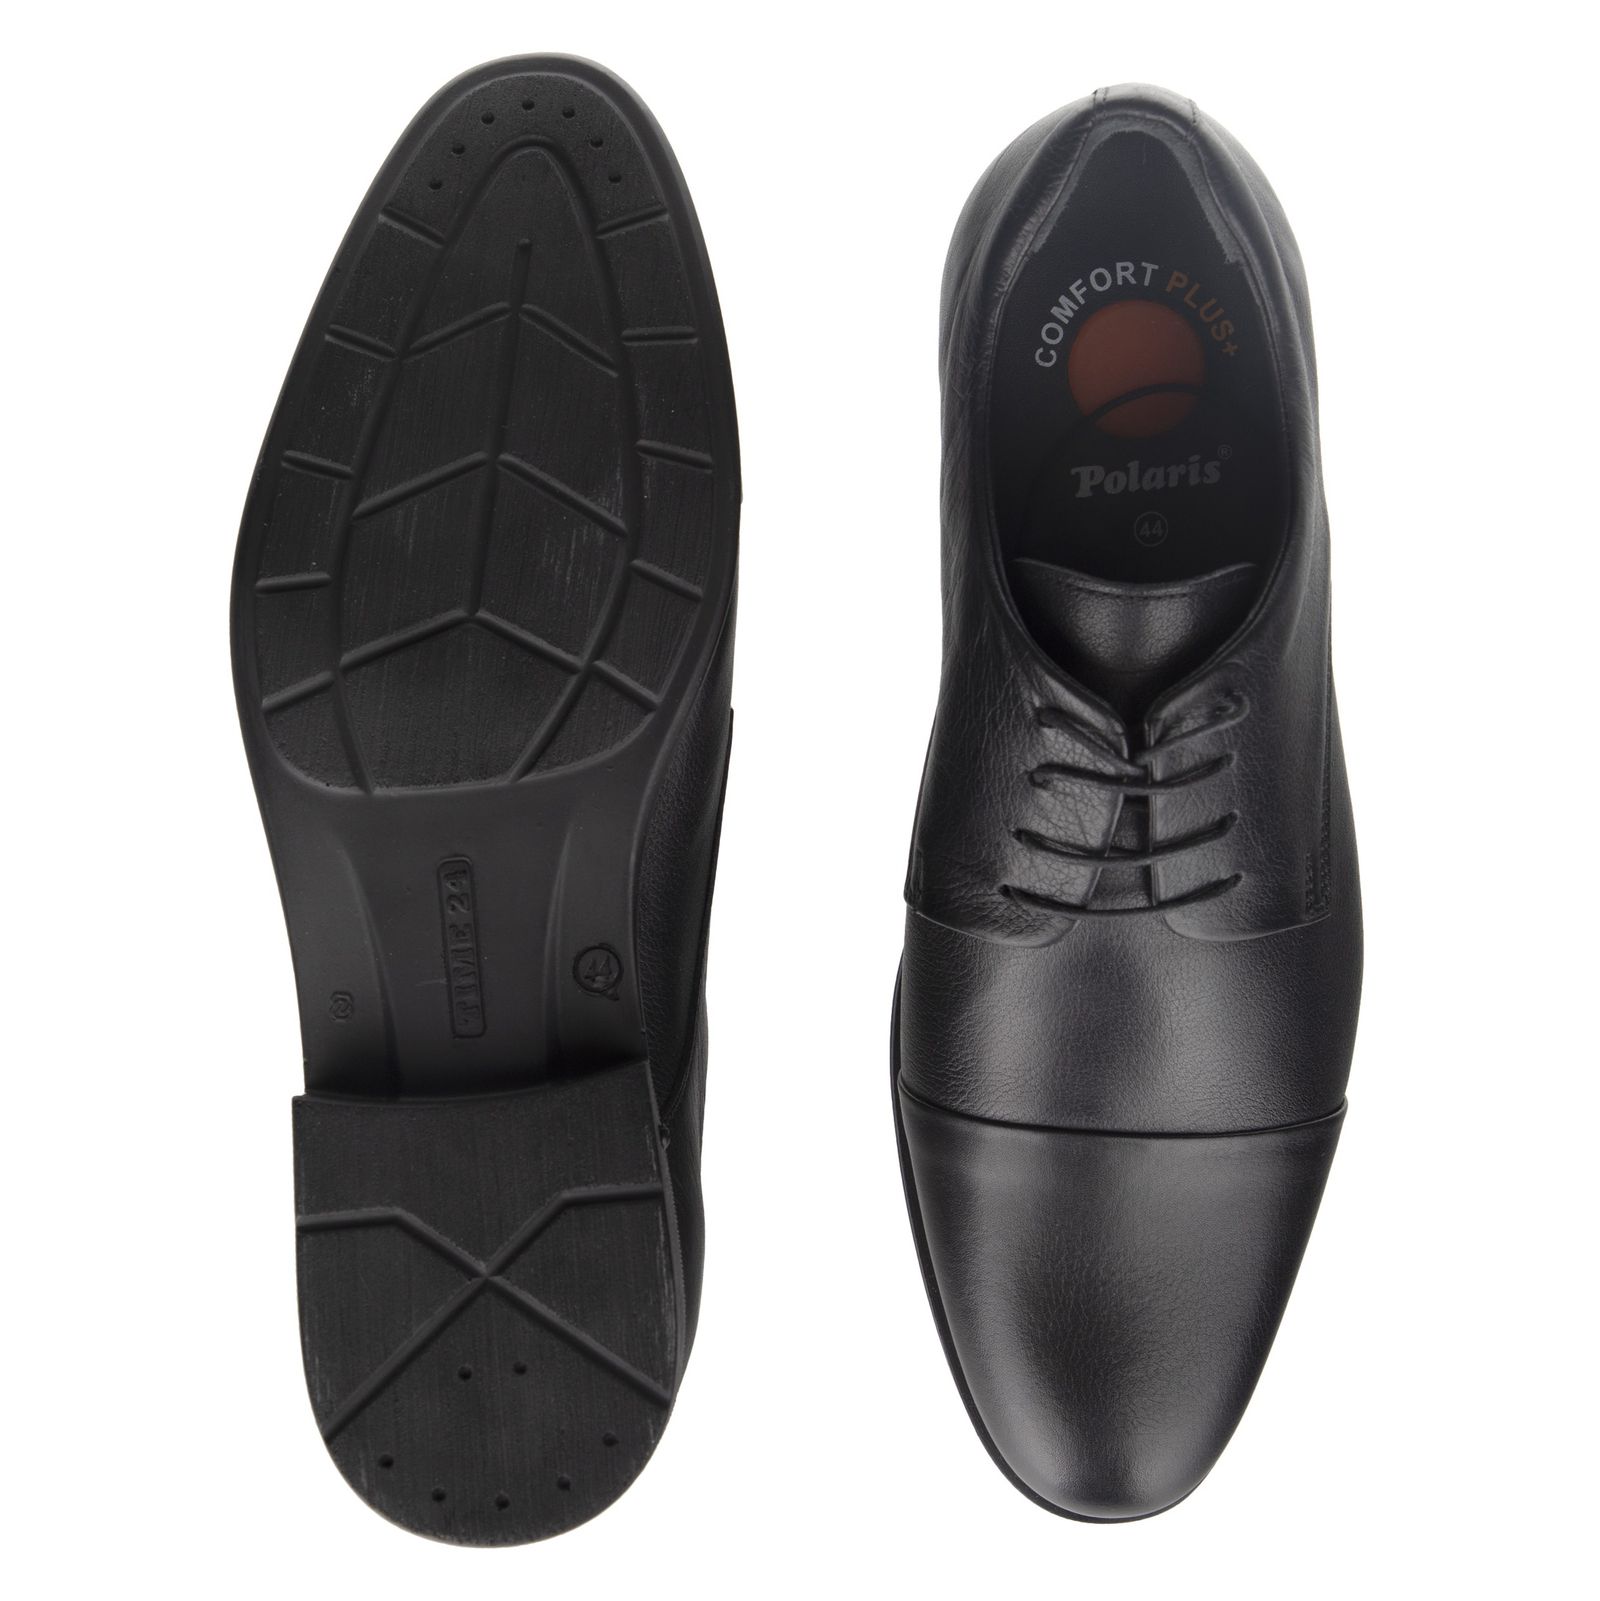 کفش مردانه پولاریس مدل 100297133-101 - مشکی - 6